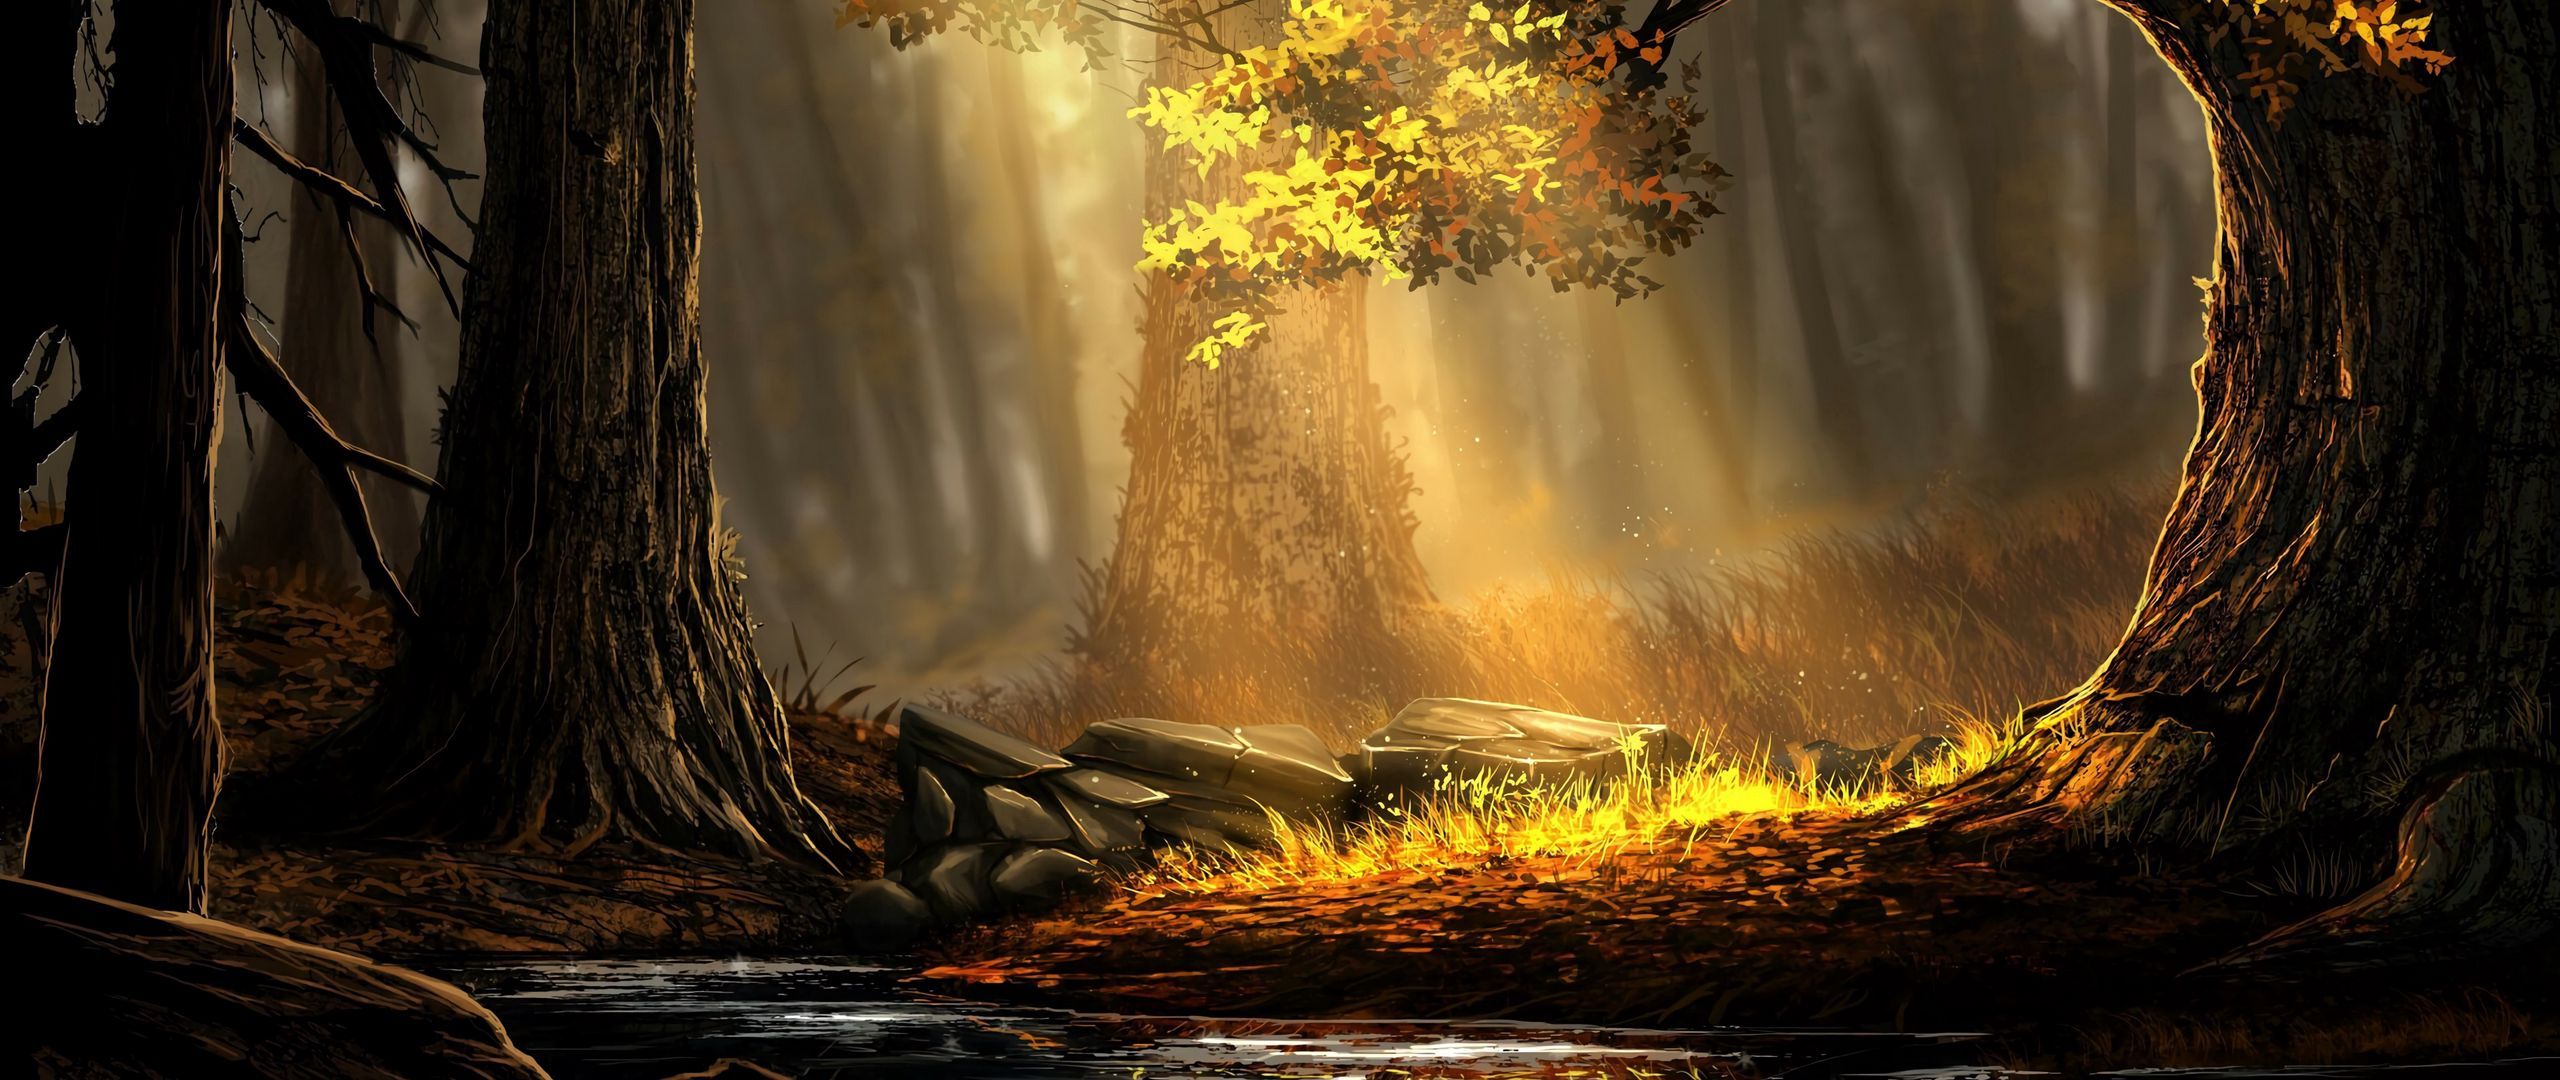 Download wallpaper 2560x1080 forest, river, trees, sunlight, art